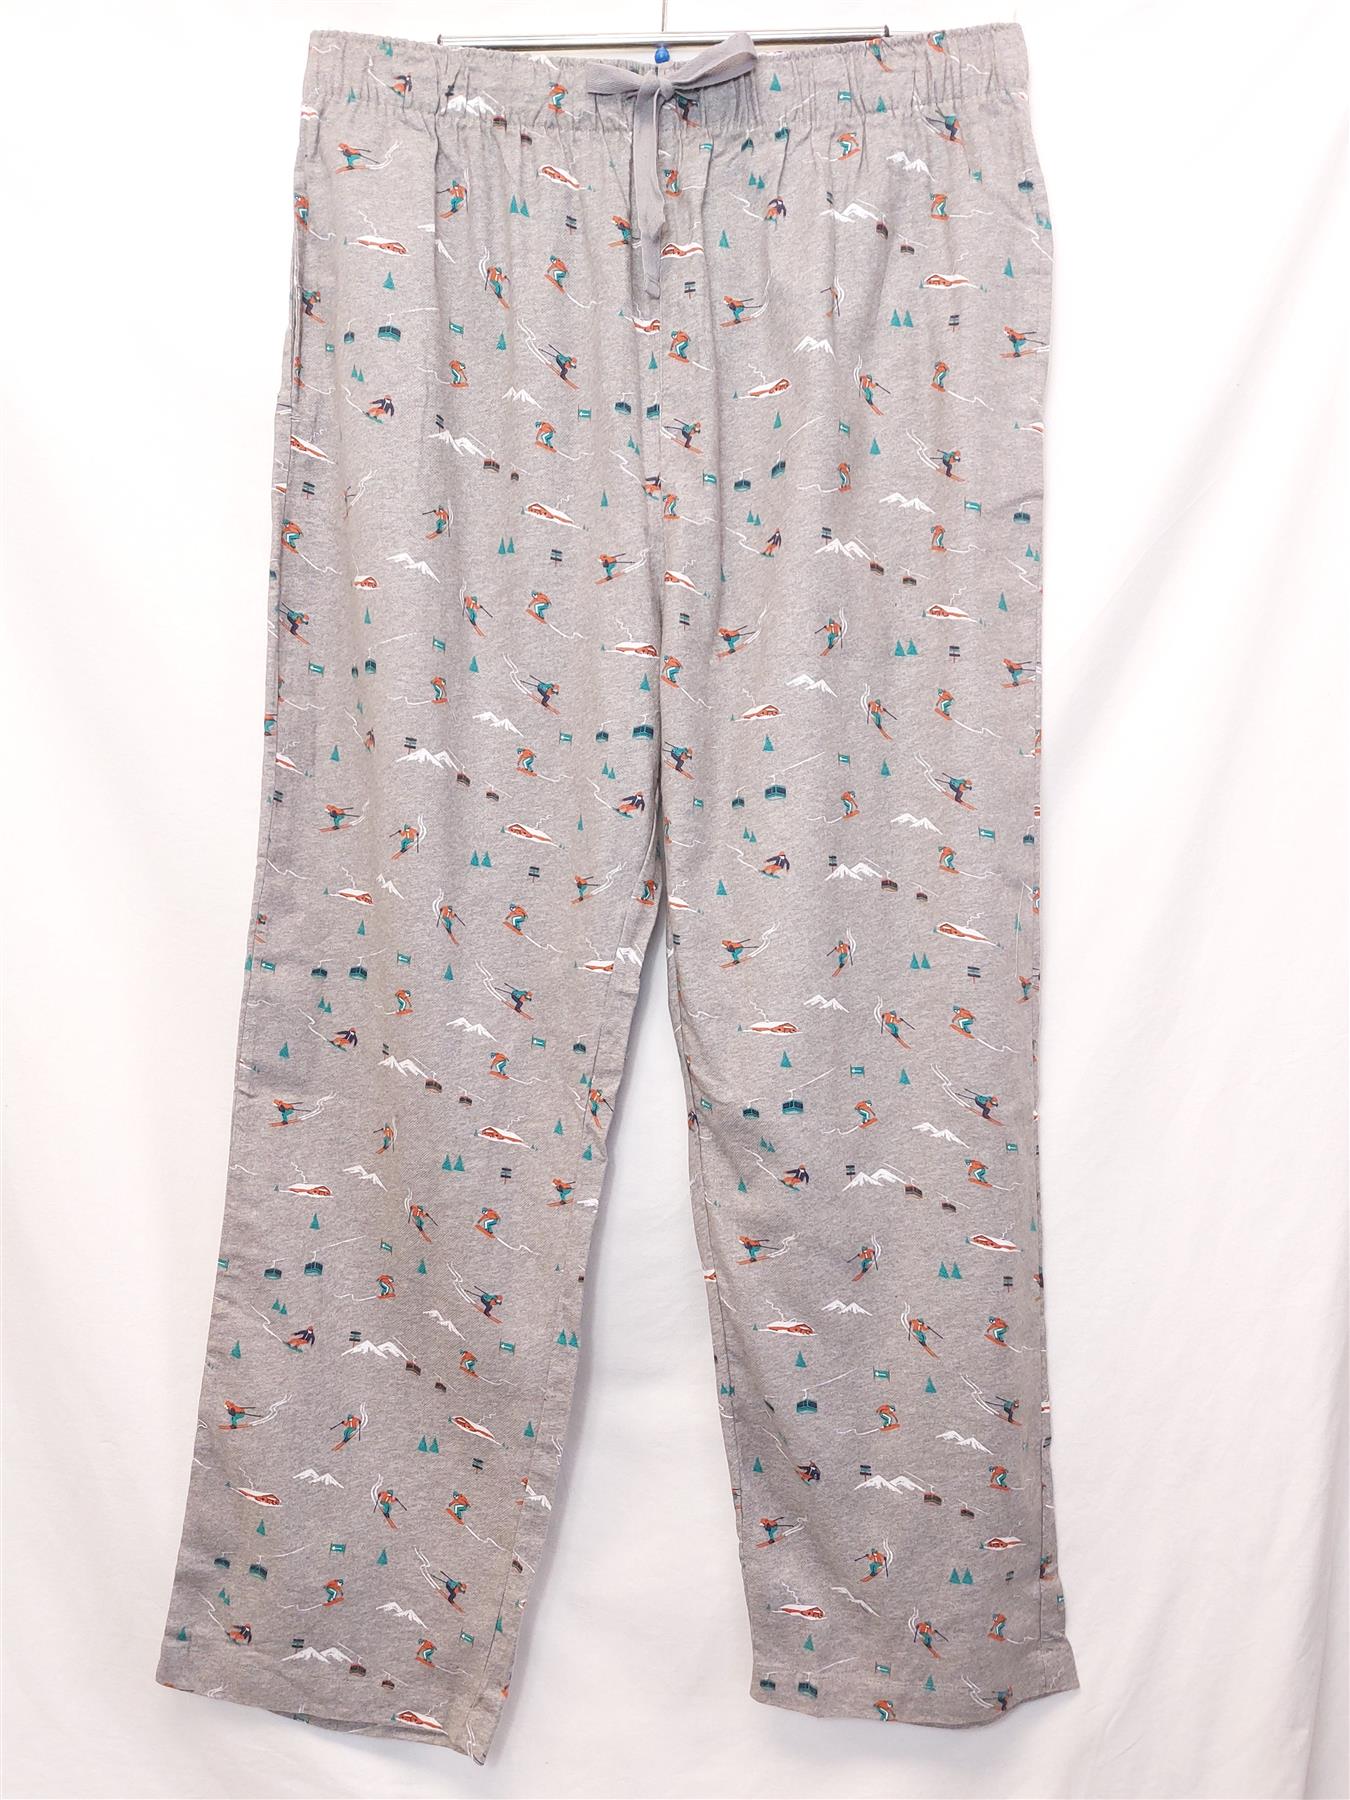 Men's Cotton Pyjama Bottoms George Warm Comfy PJ Pants Grey Winter Ski Pattern